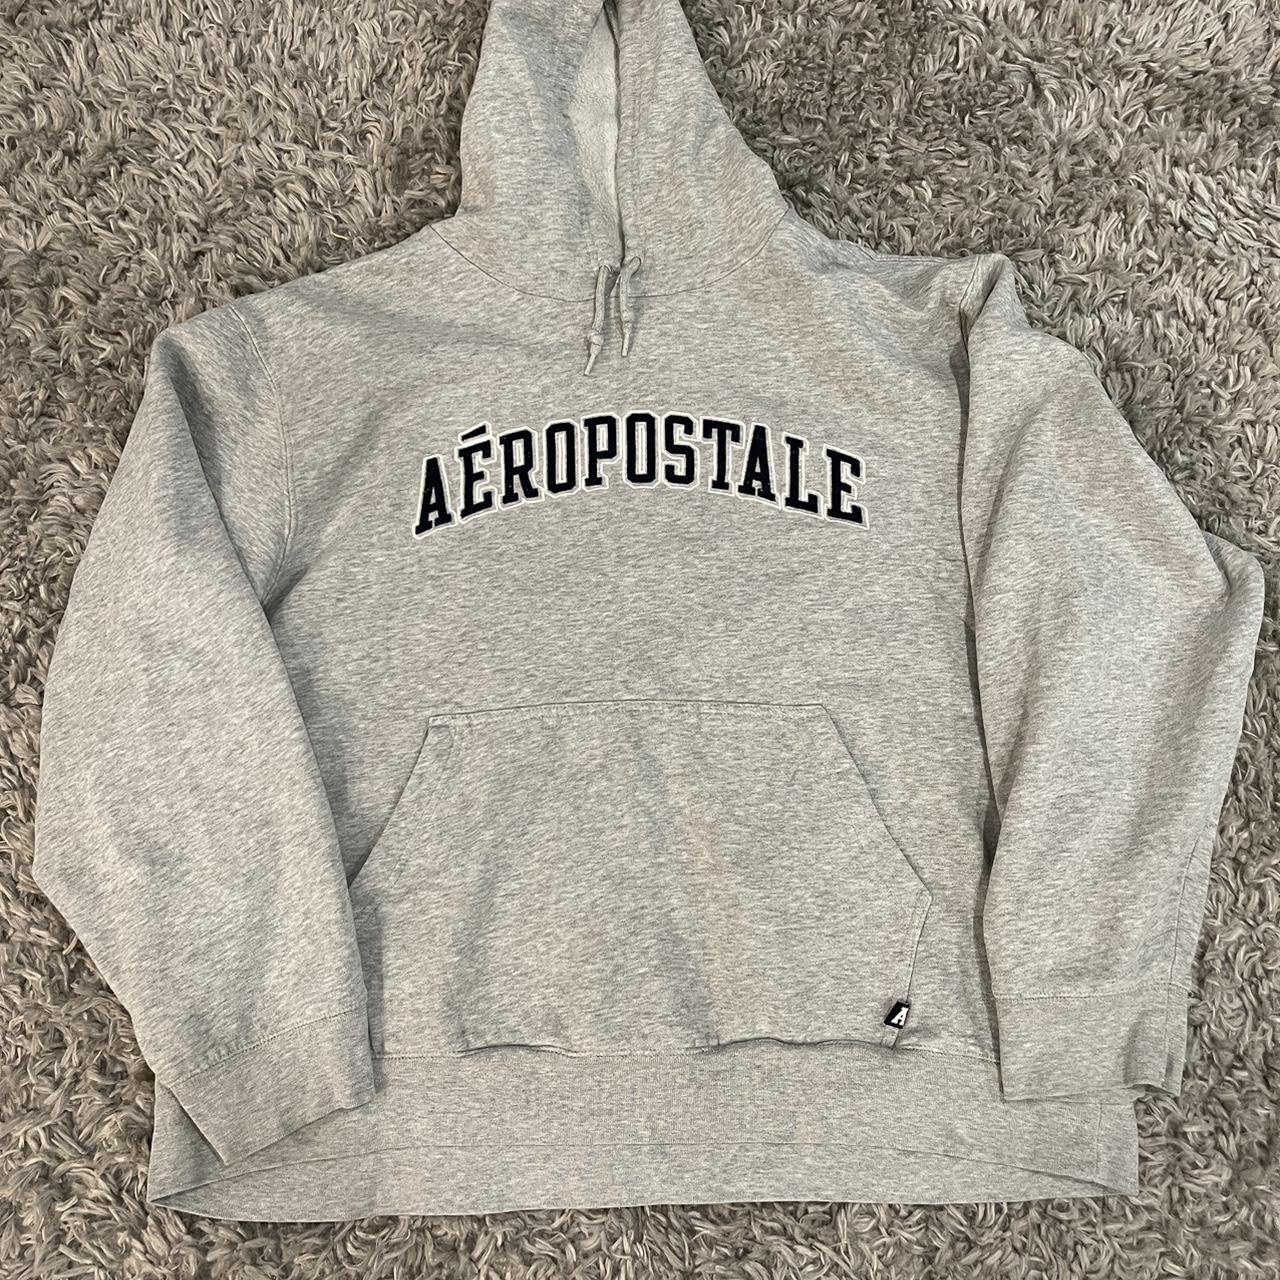 Aeropostale Women's Grey and White Sweatshirt